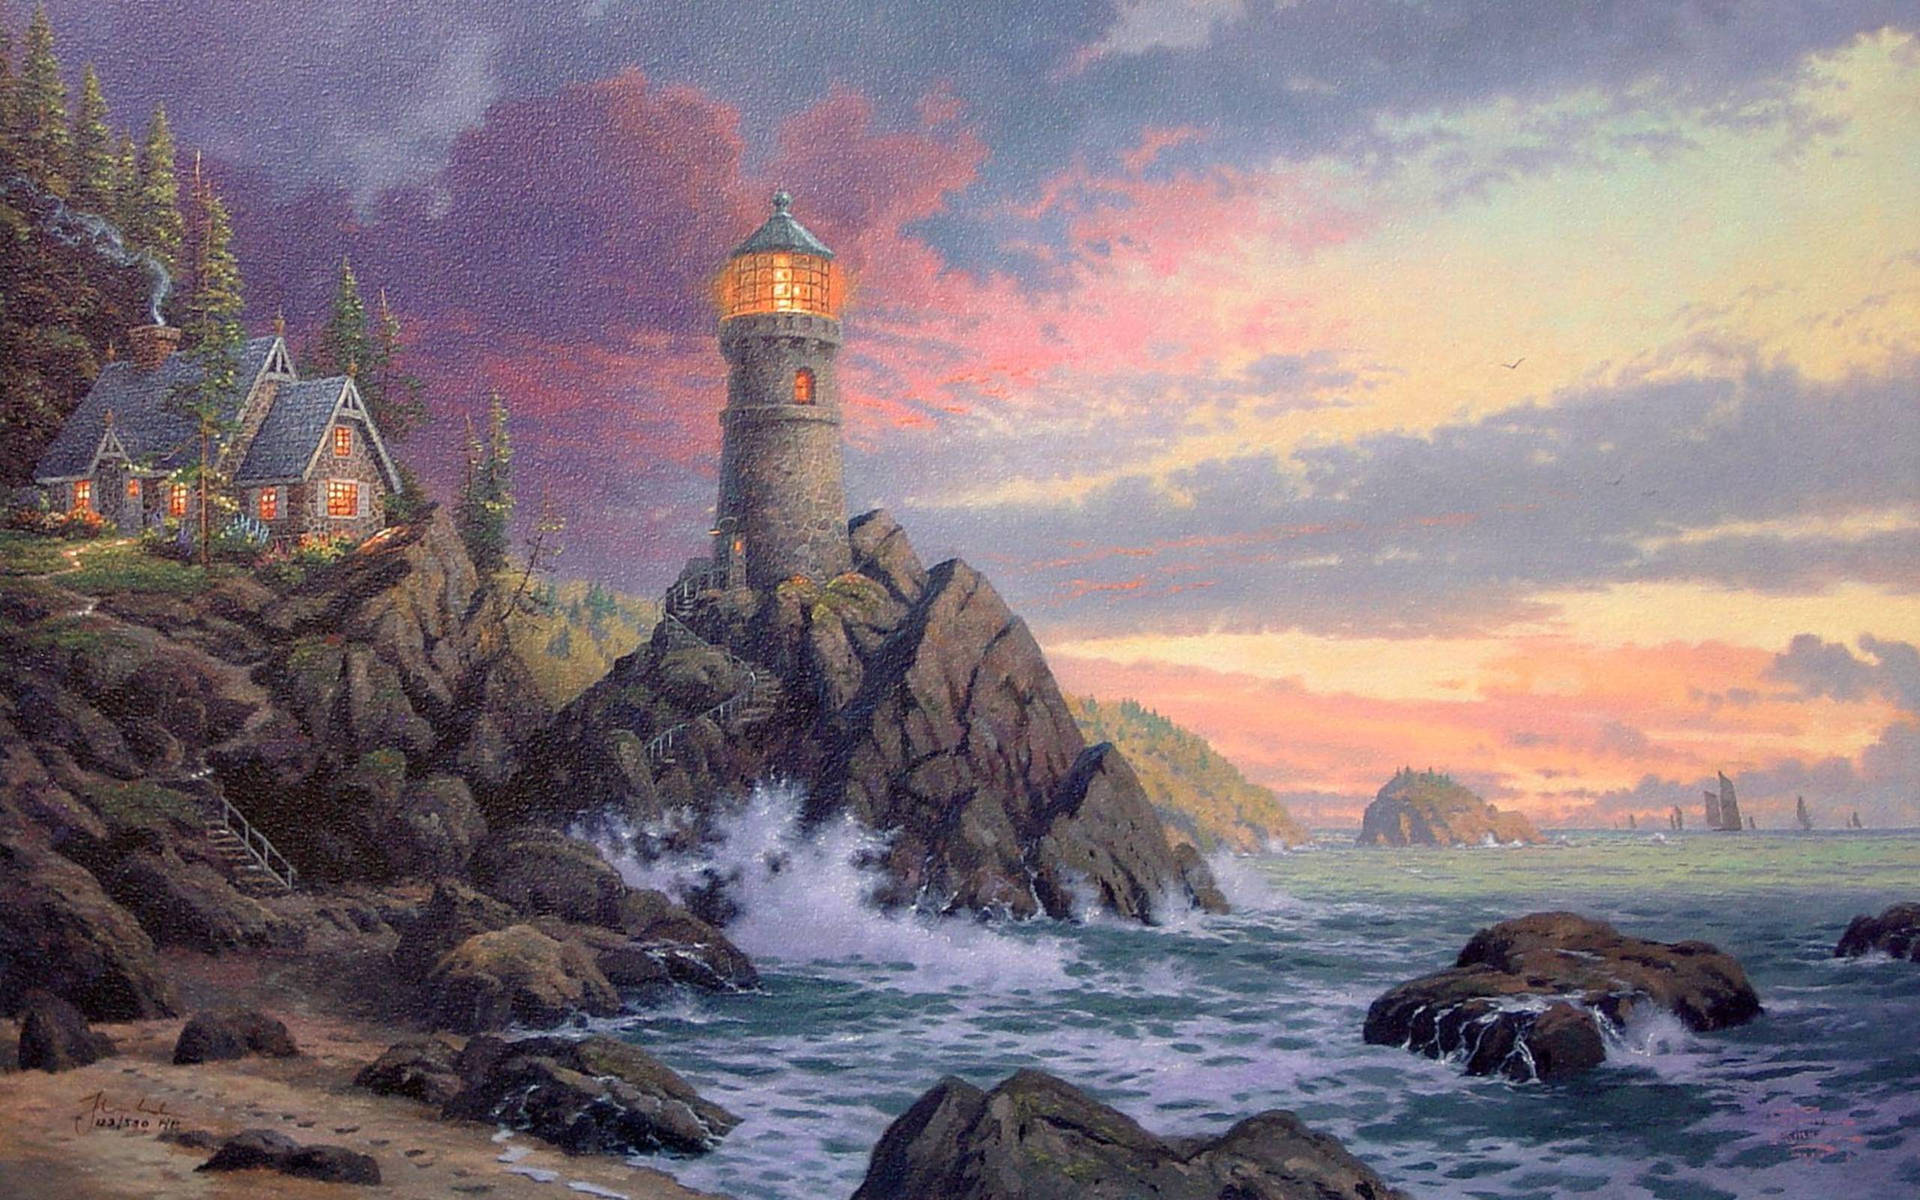 Classic Coastal Lighthouse Illustration Wallpaper